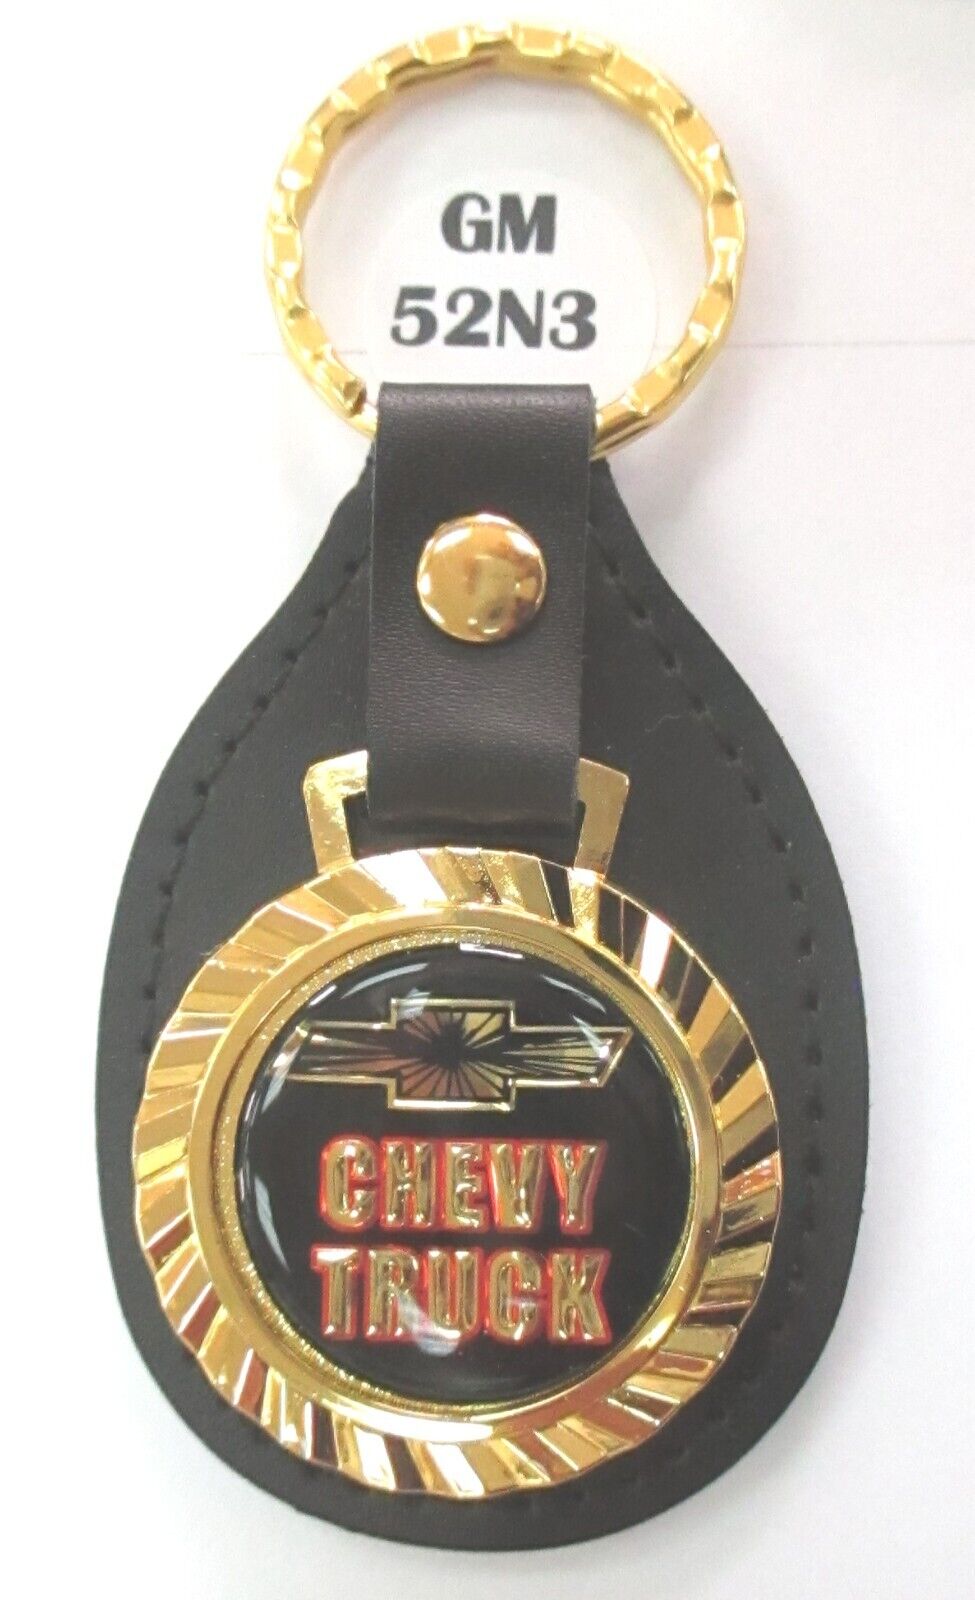 Black CHEVY TRUCK #52N3 Royal Classic Gold Tone Leather Key Ring 1953 1954 1955